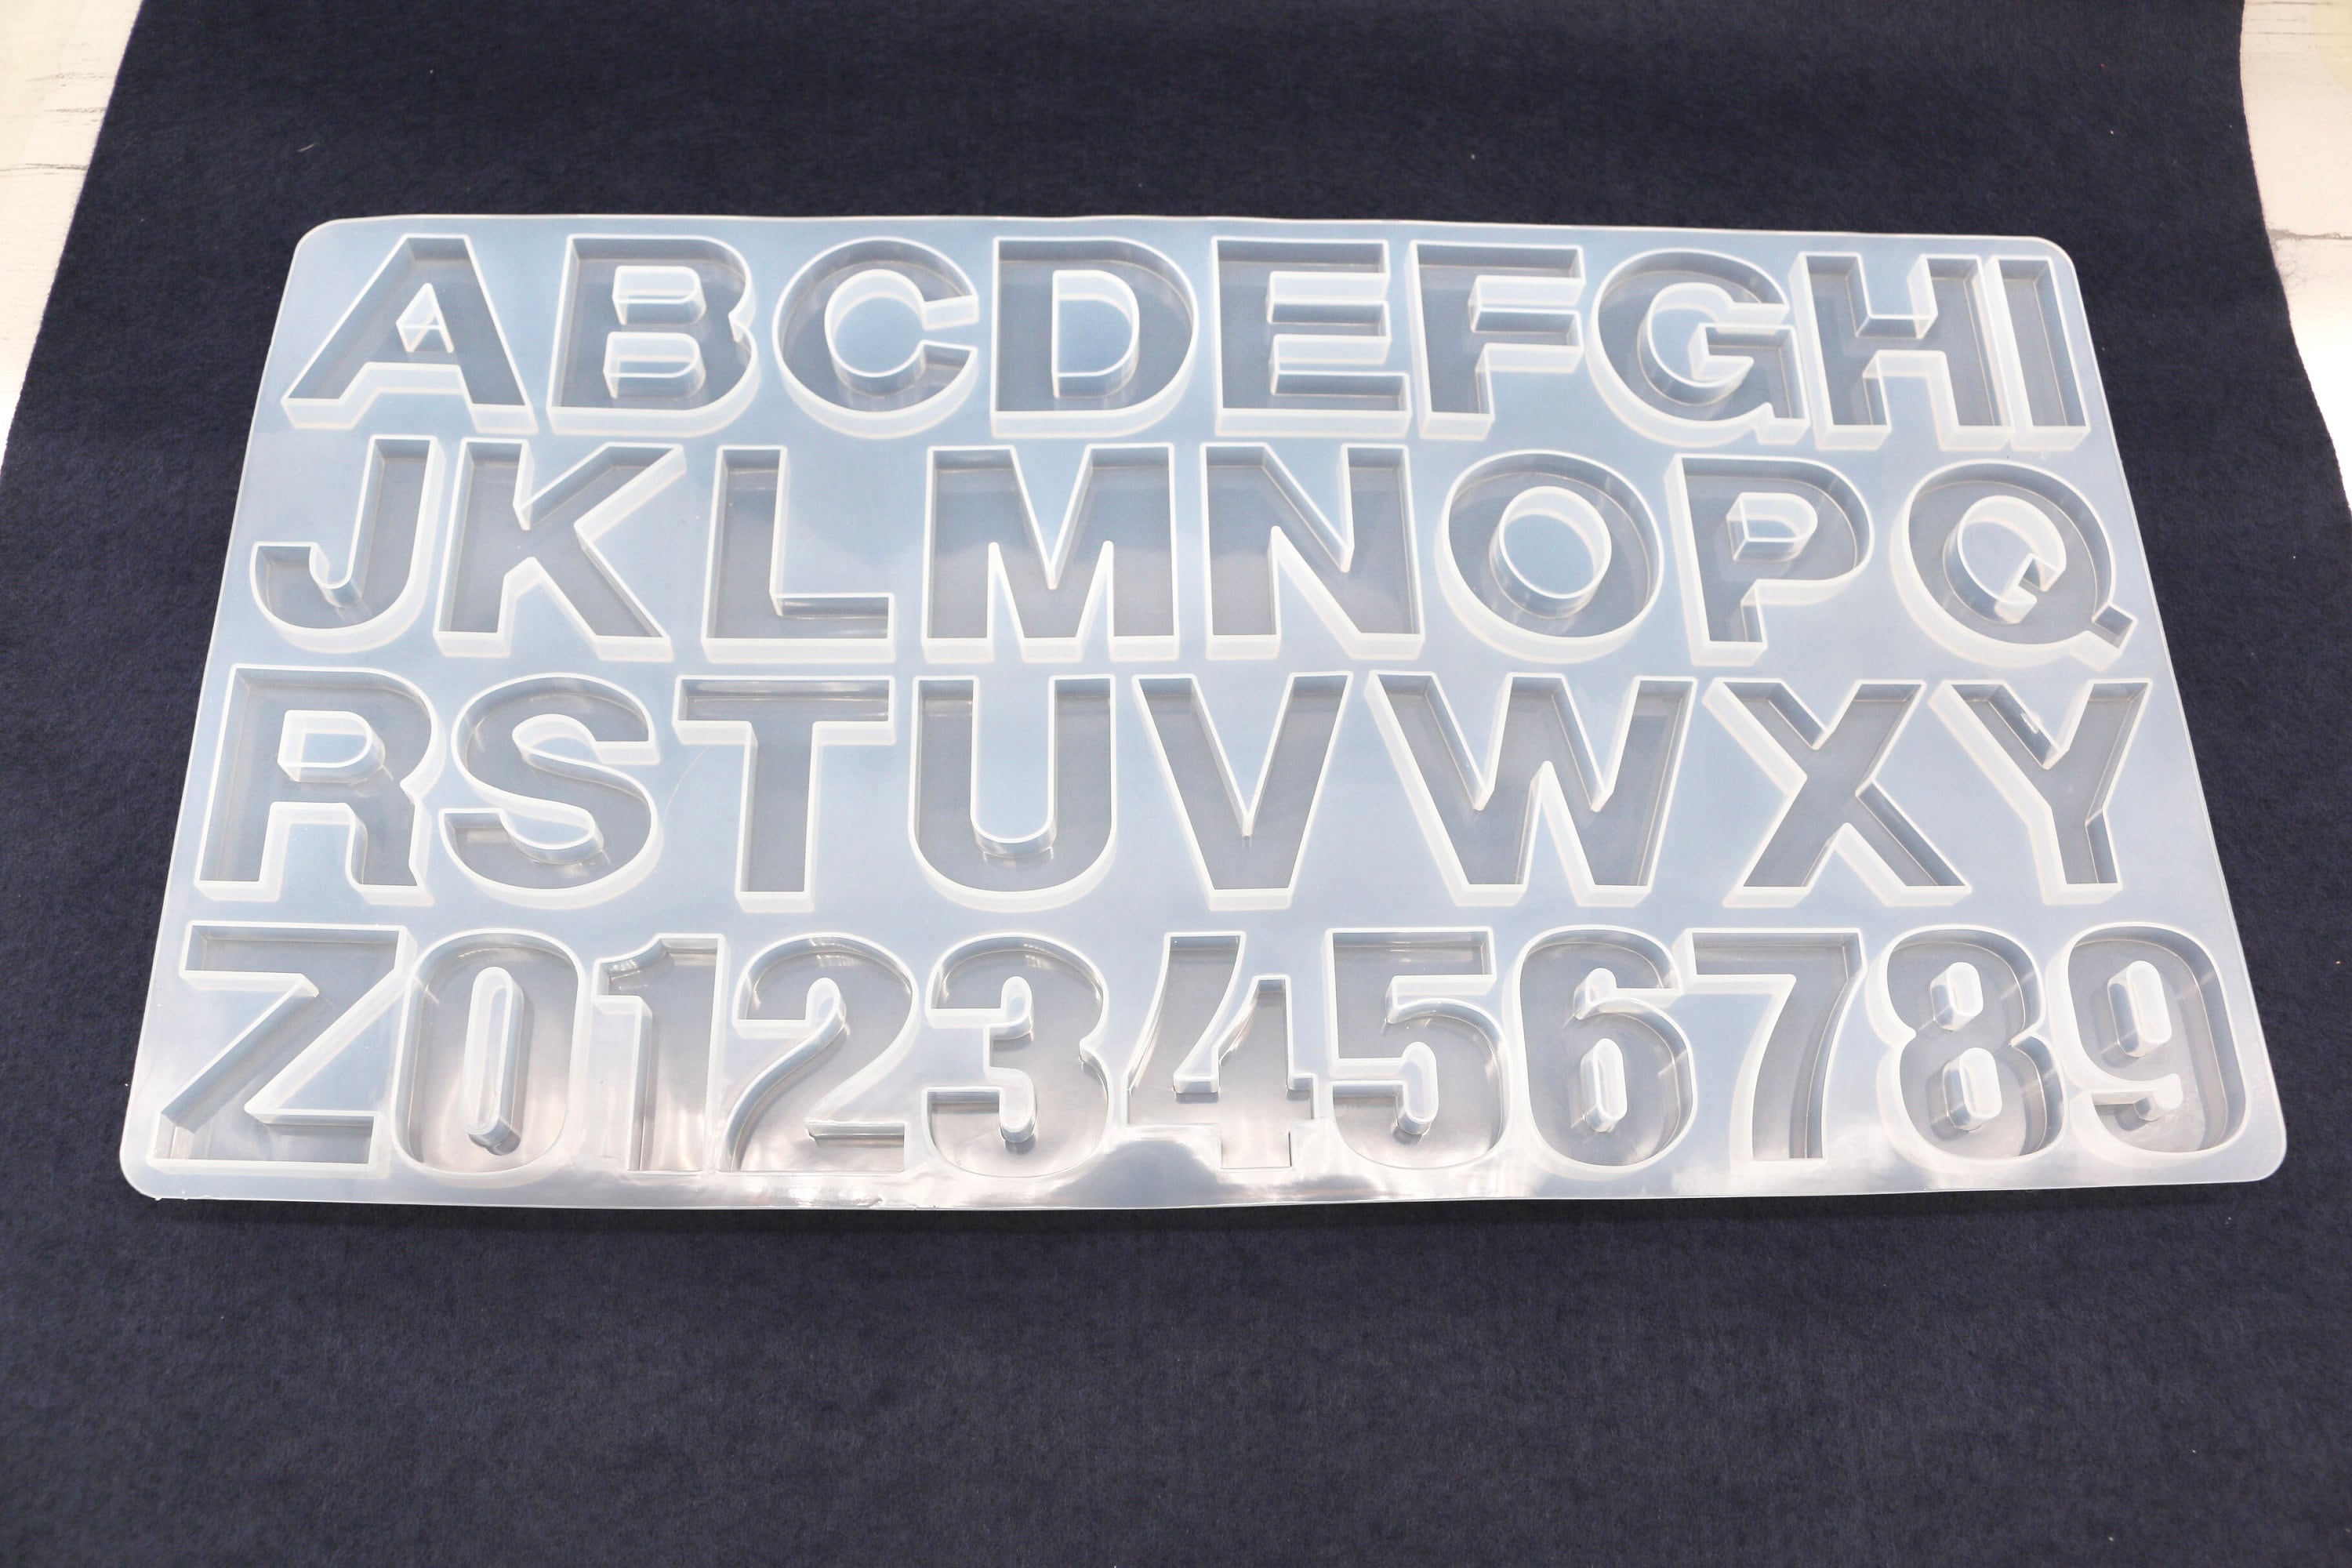 Midsize Alphabet 26 Letter Keychain Molds Standard A-Z Silicone